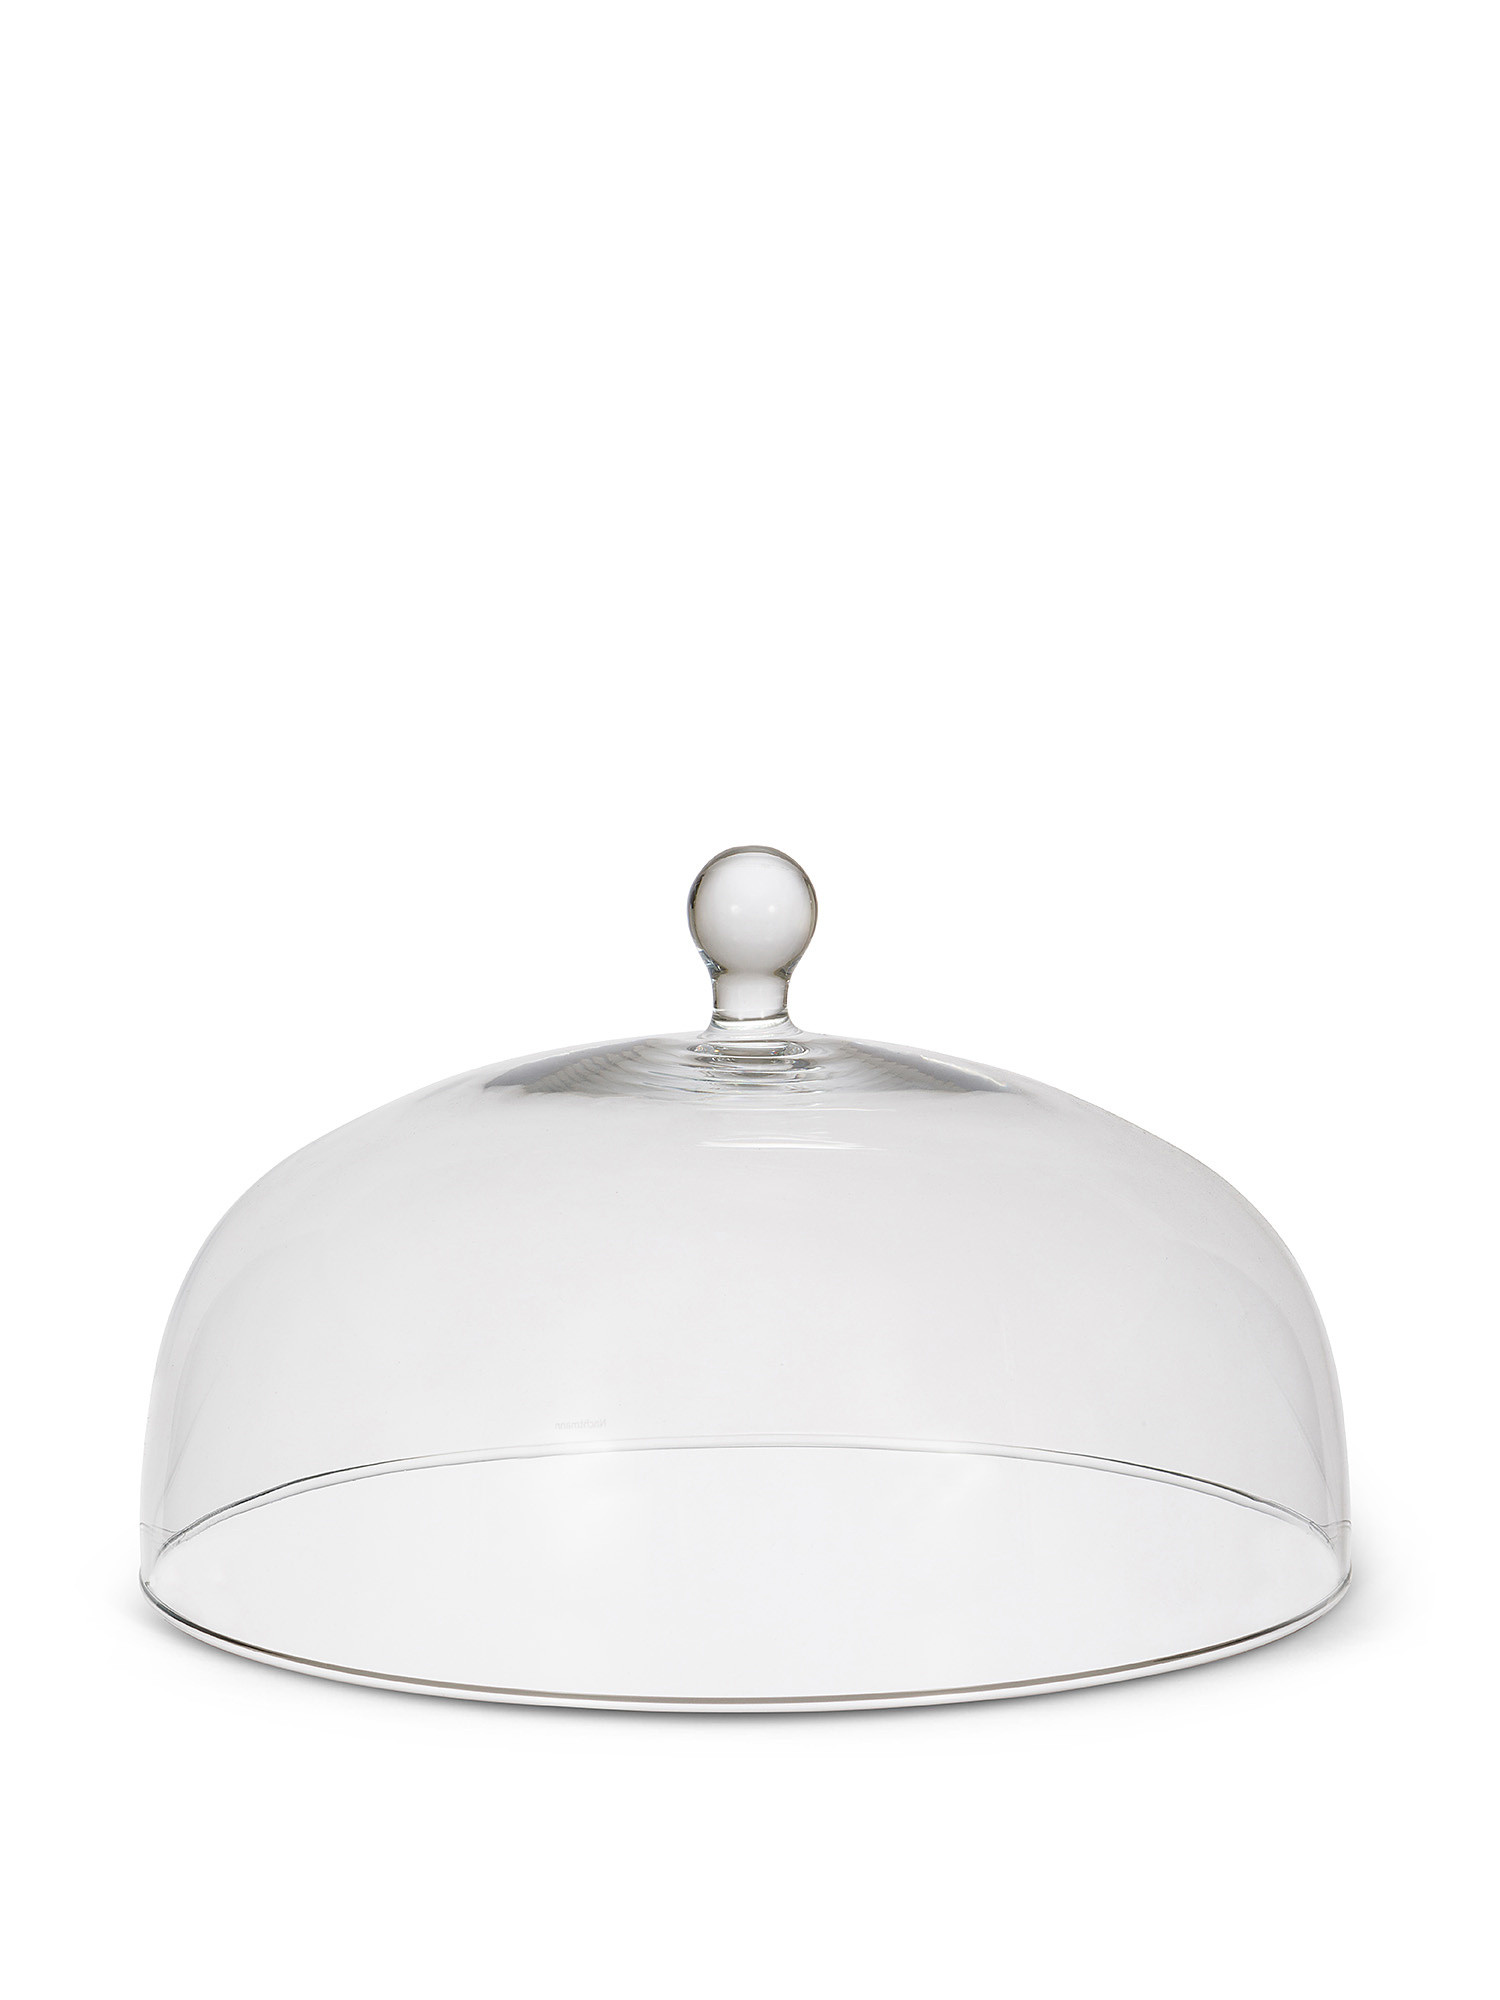 Dome for glass riser, Transparent, large image number 0